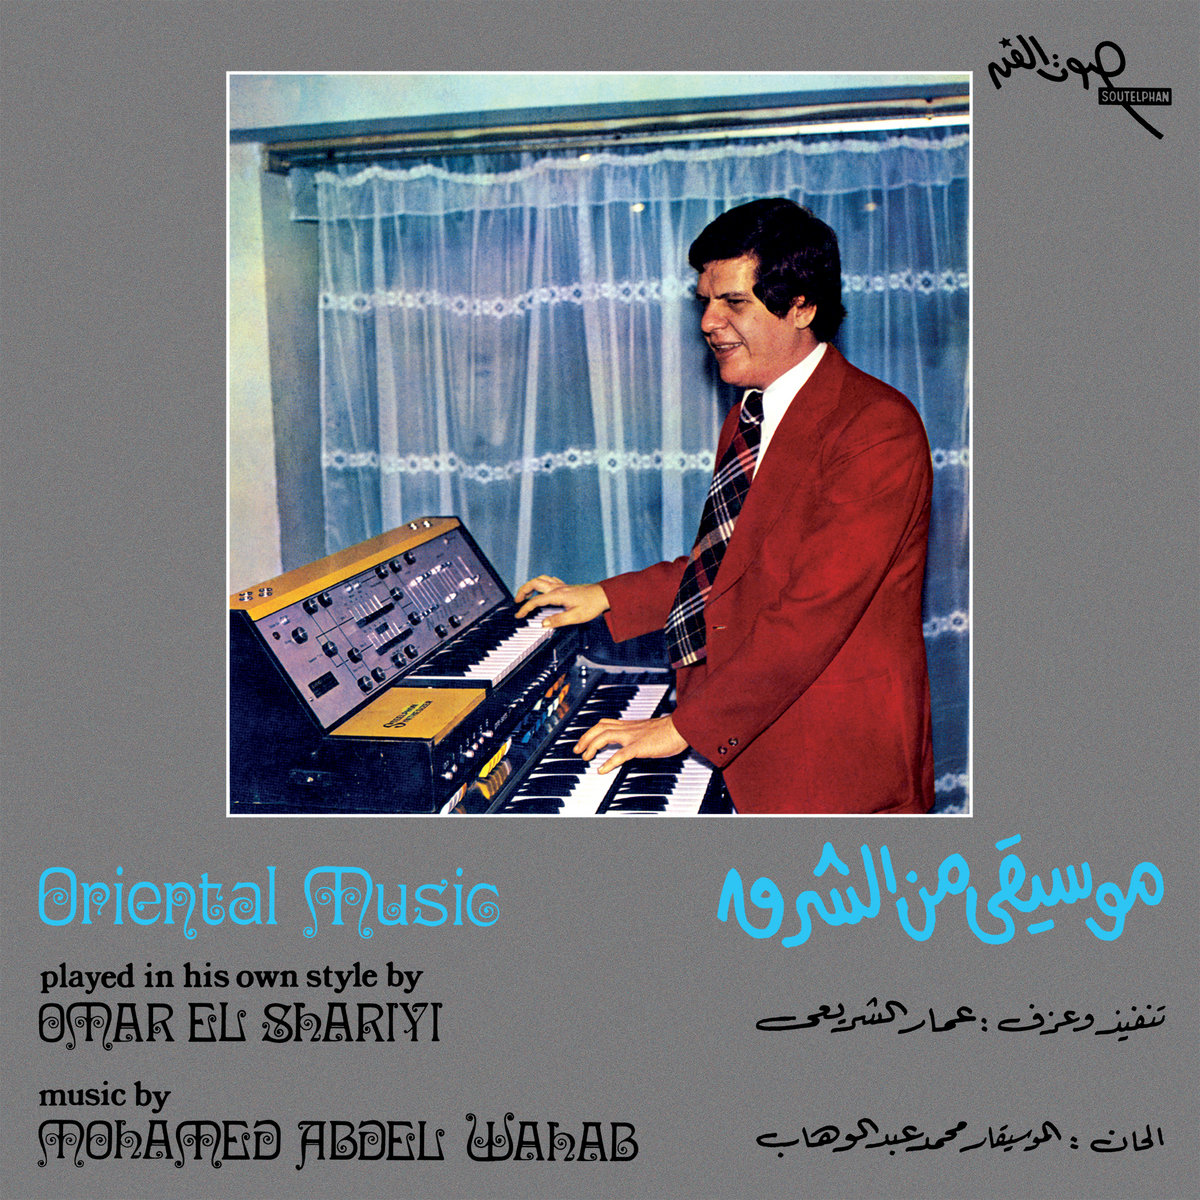 Omar El Shariyi (Ammar El Sherei) "Oriental Music" LP